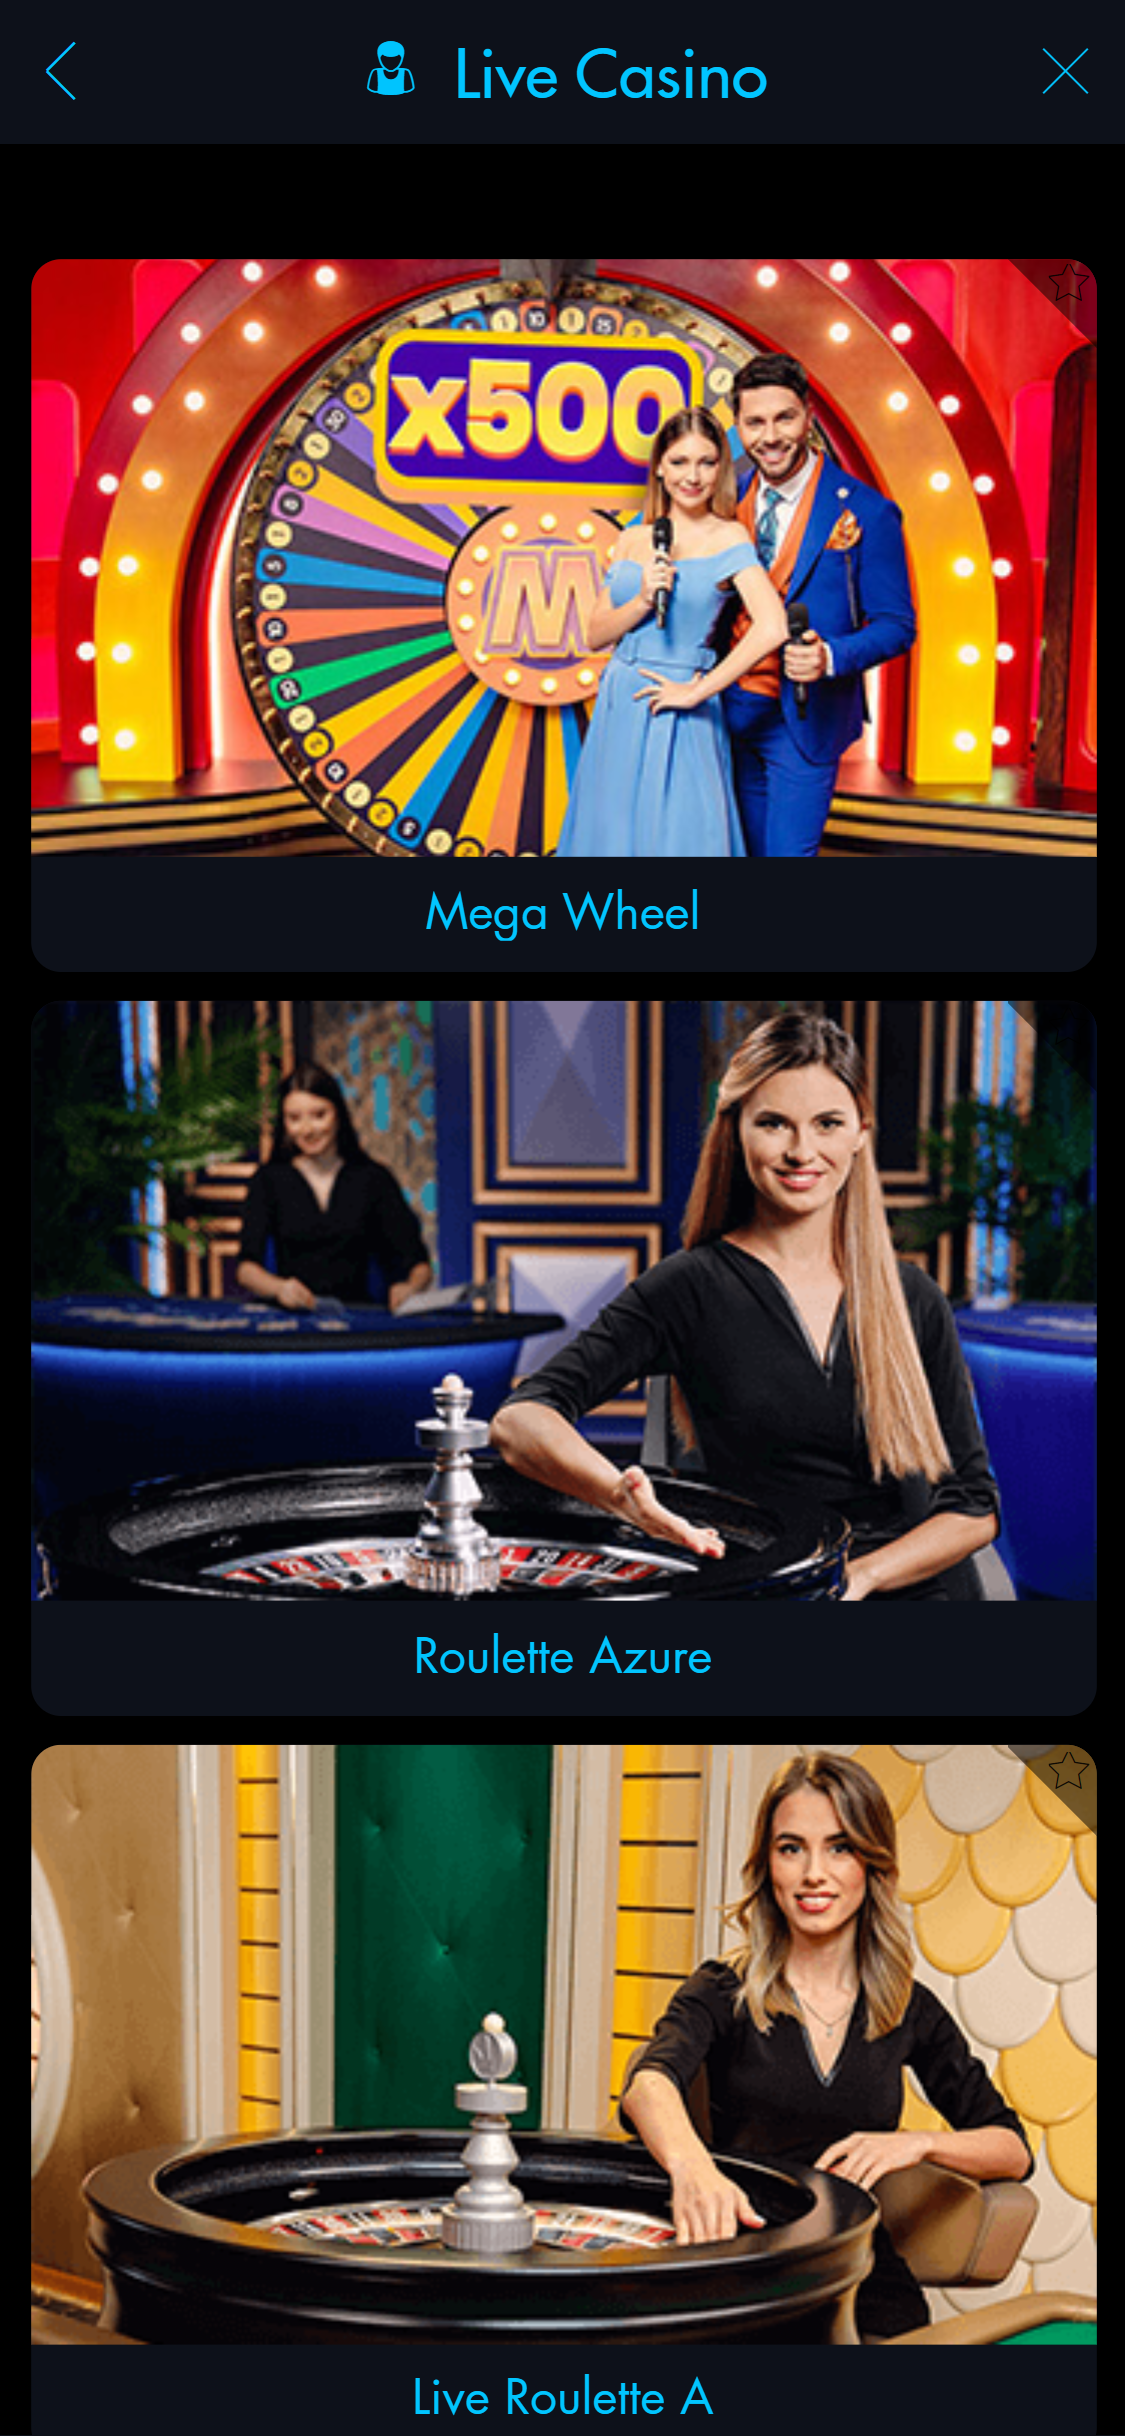 Winward Casino Mobile Live Dealer Games Review